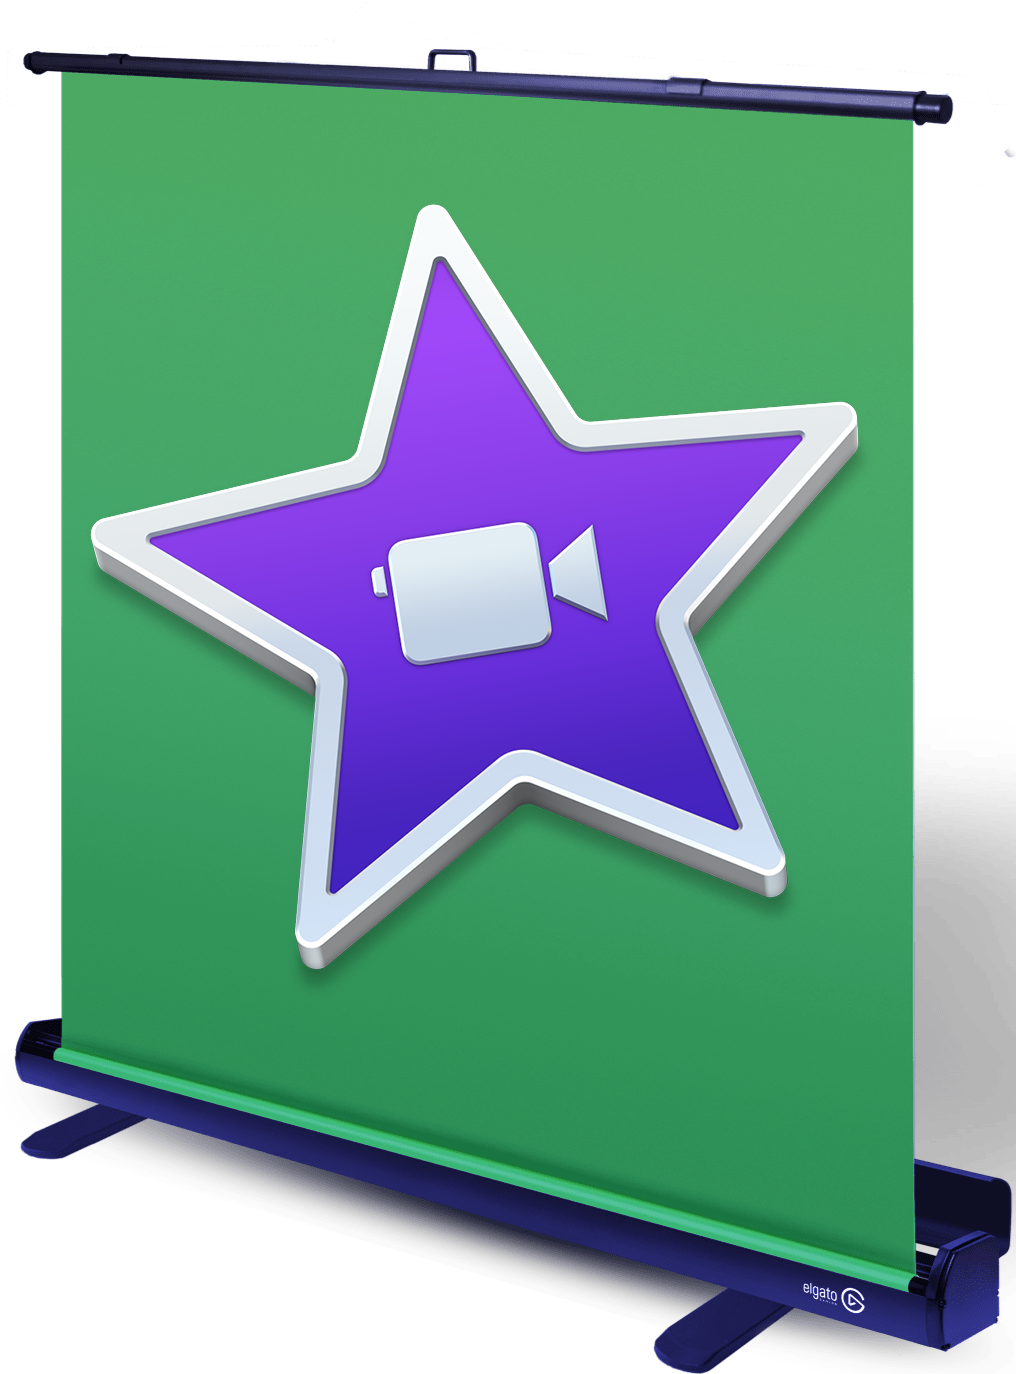 iMovie logo with green screen